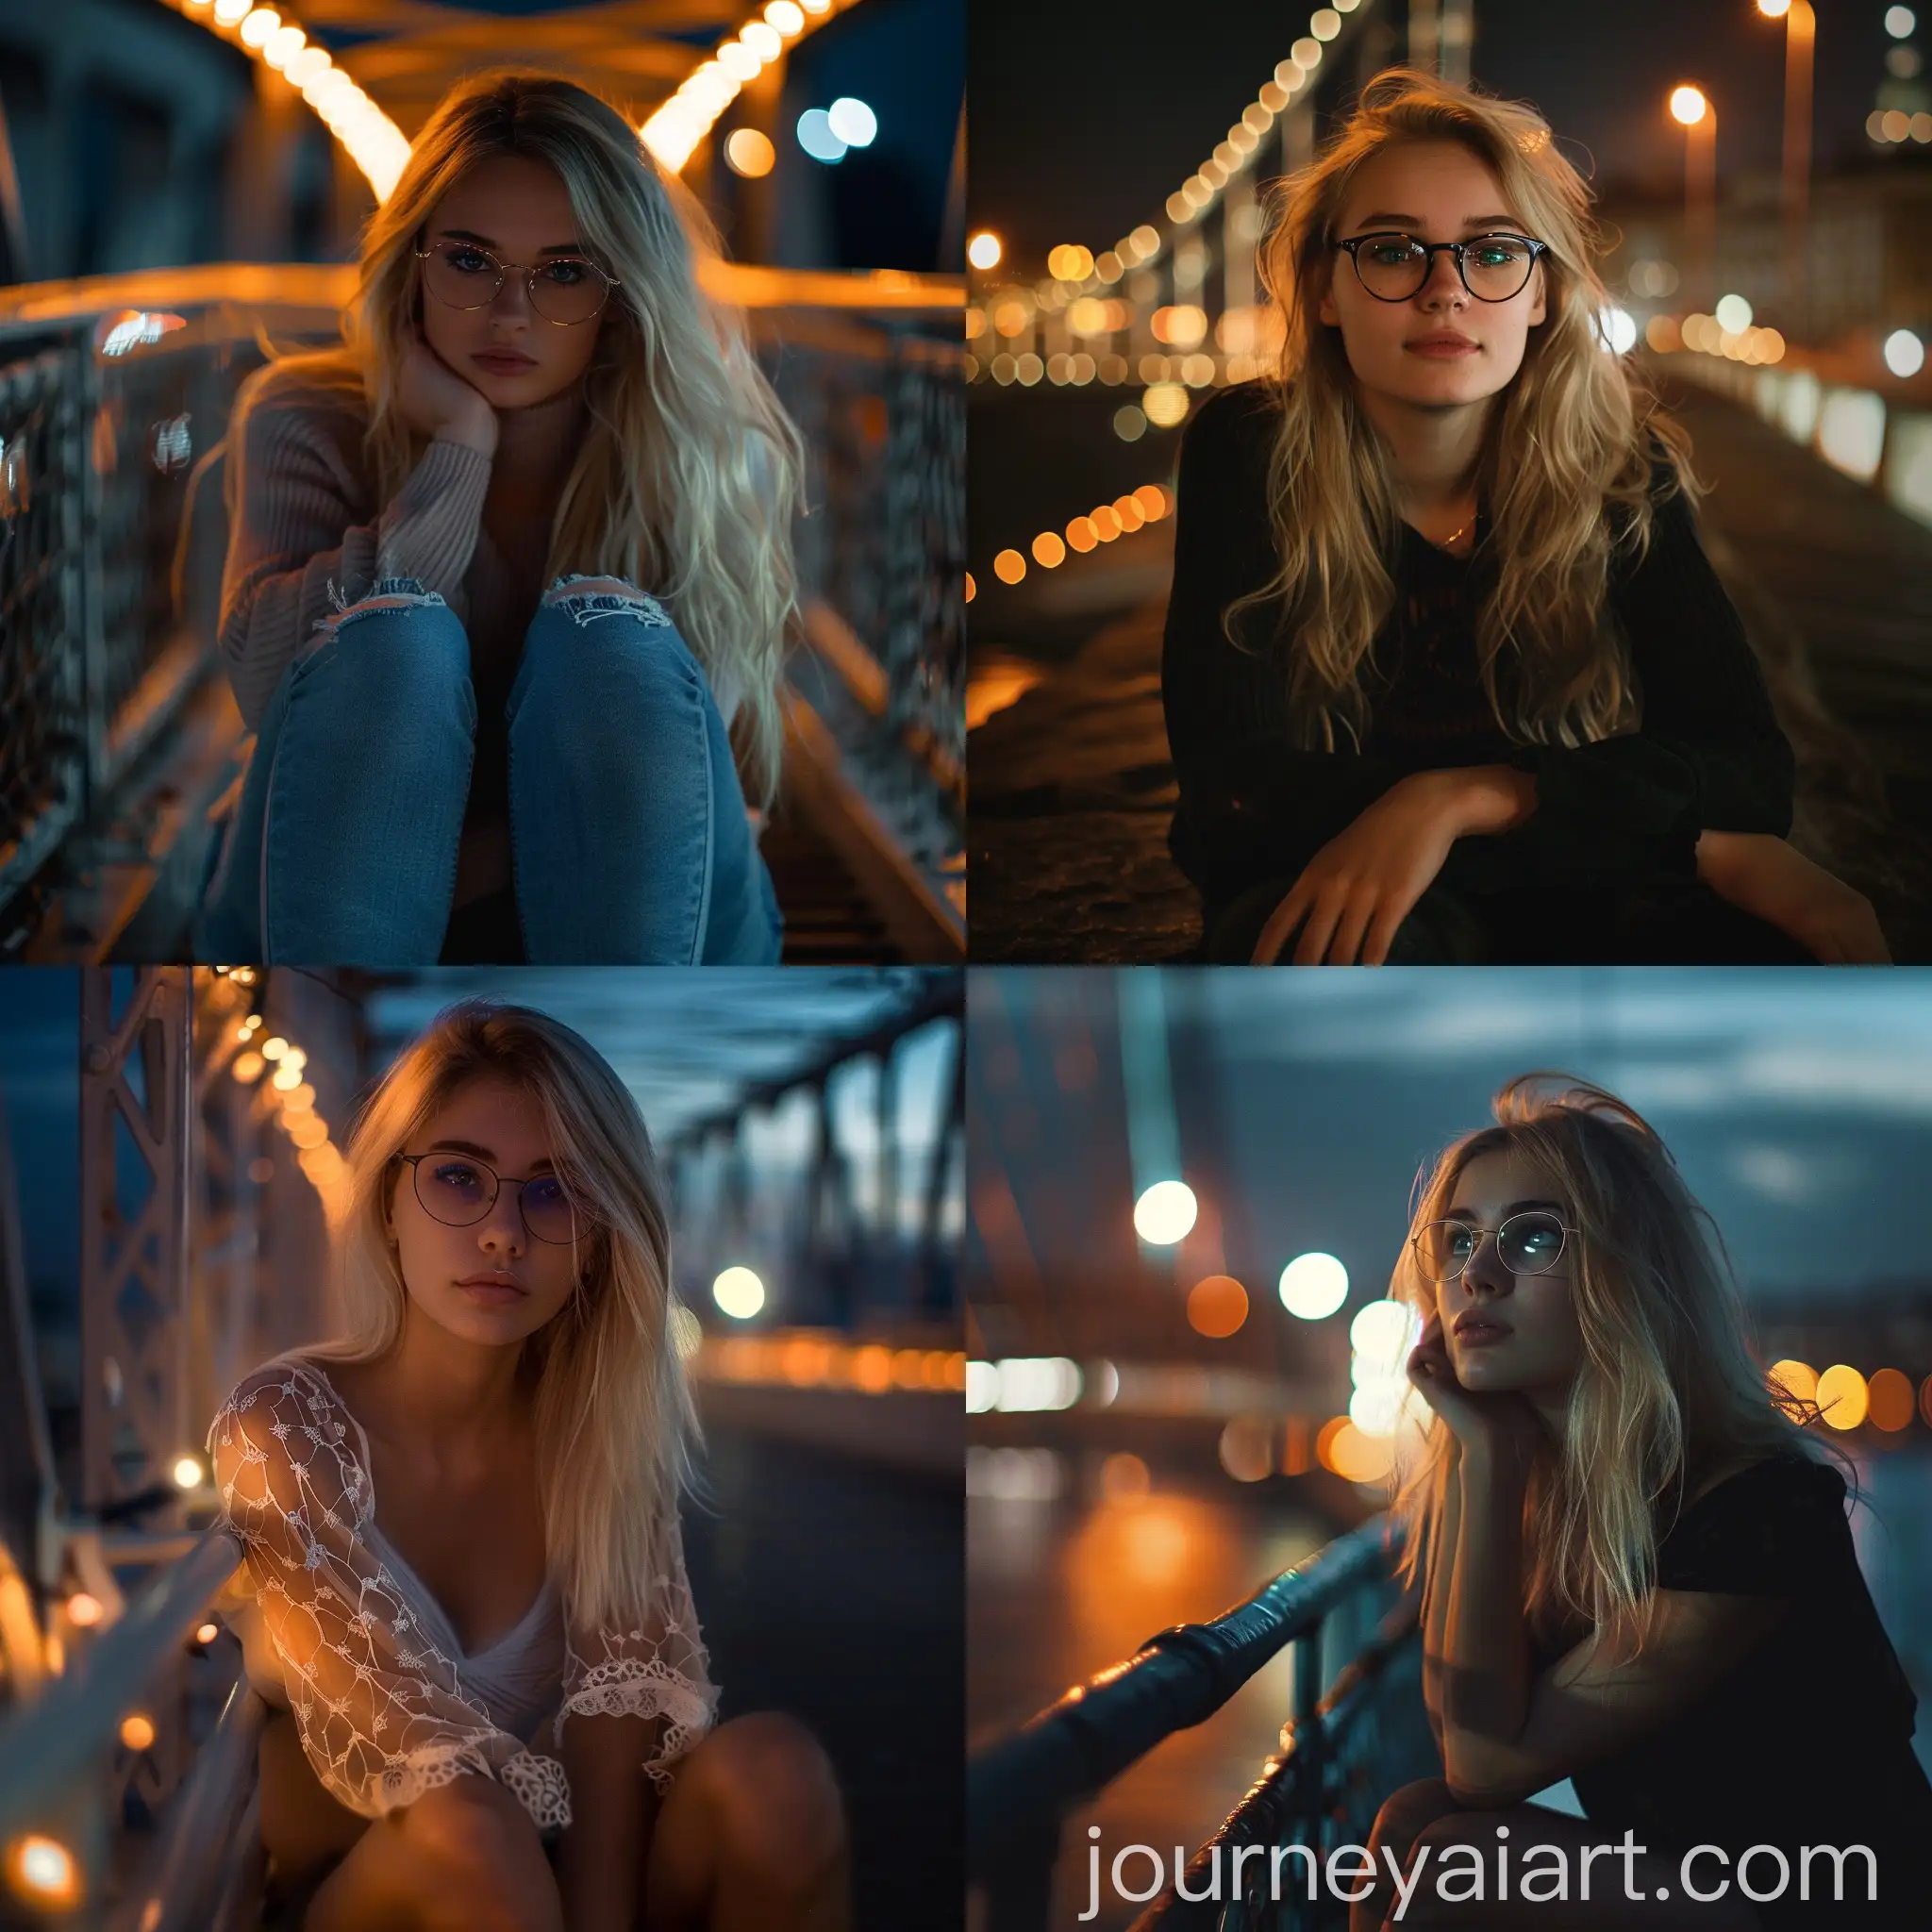 Girl-in-Glasses-Sitting-on-Bridge-at-Night